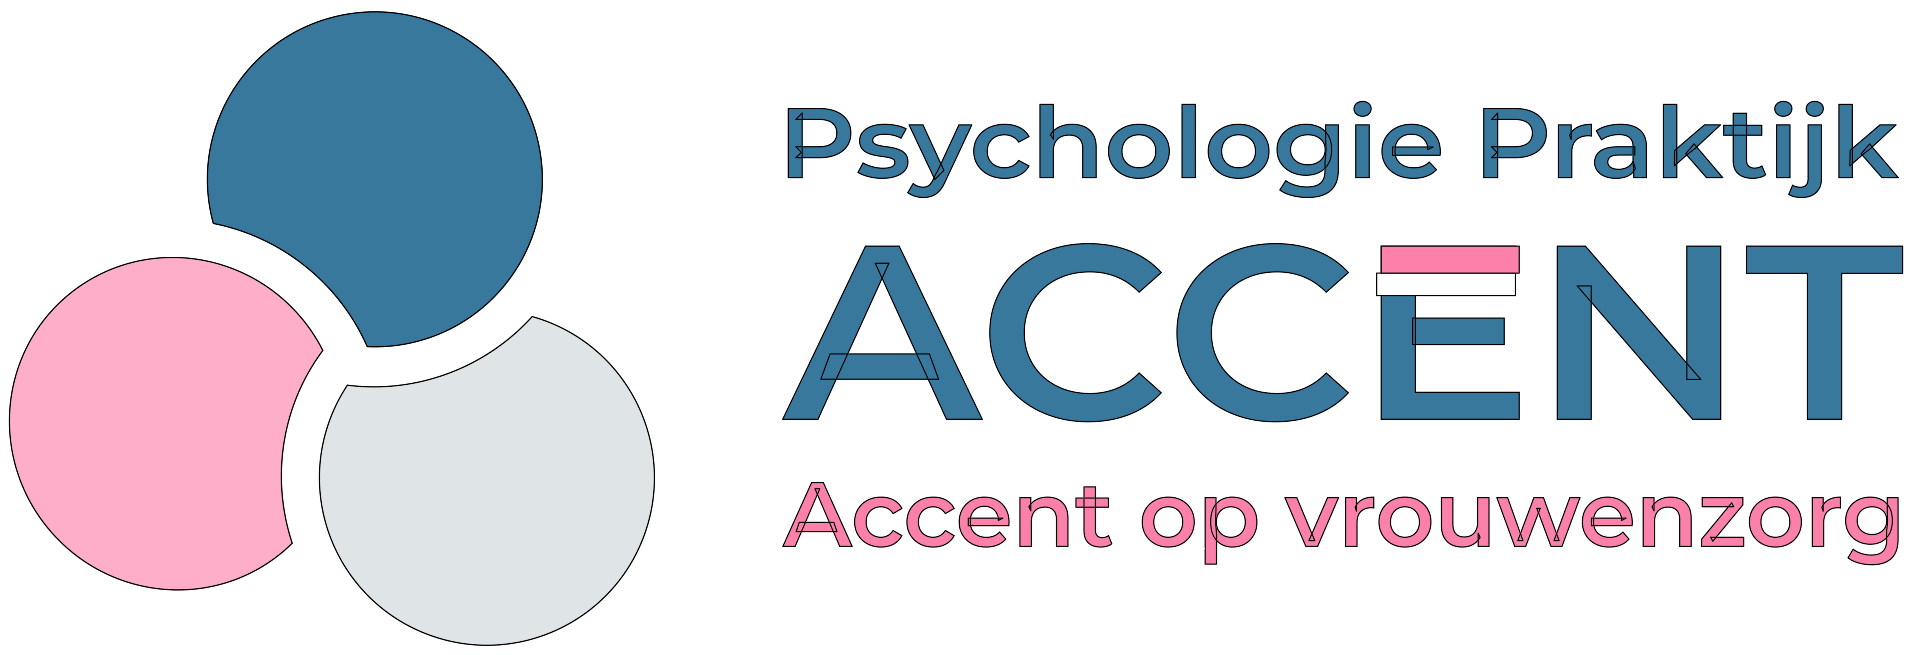 Accent Psychologie Praktijk logo